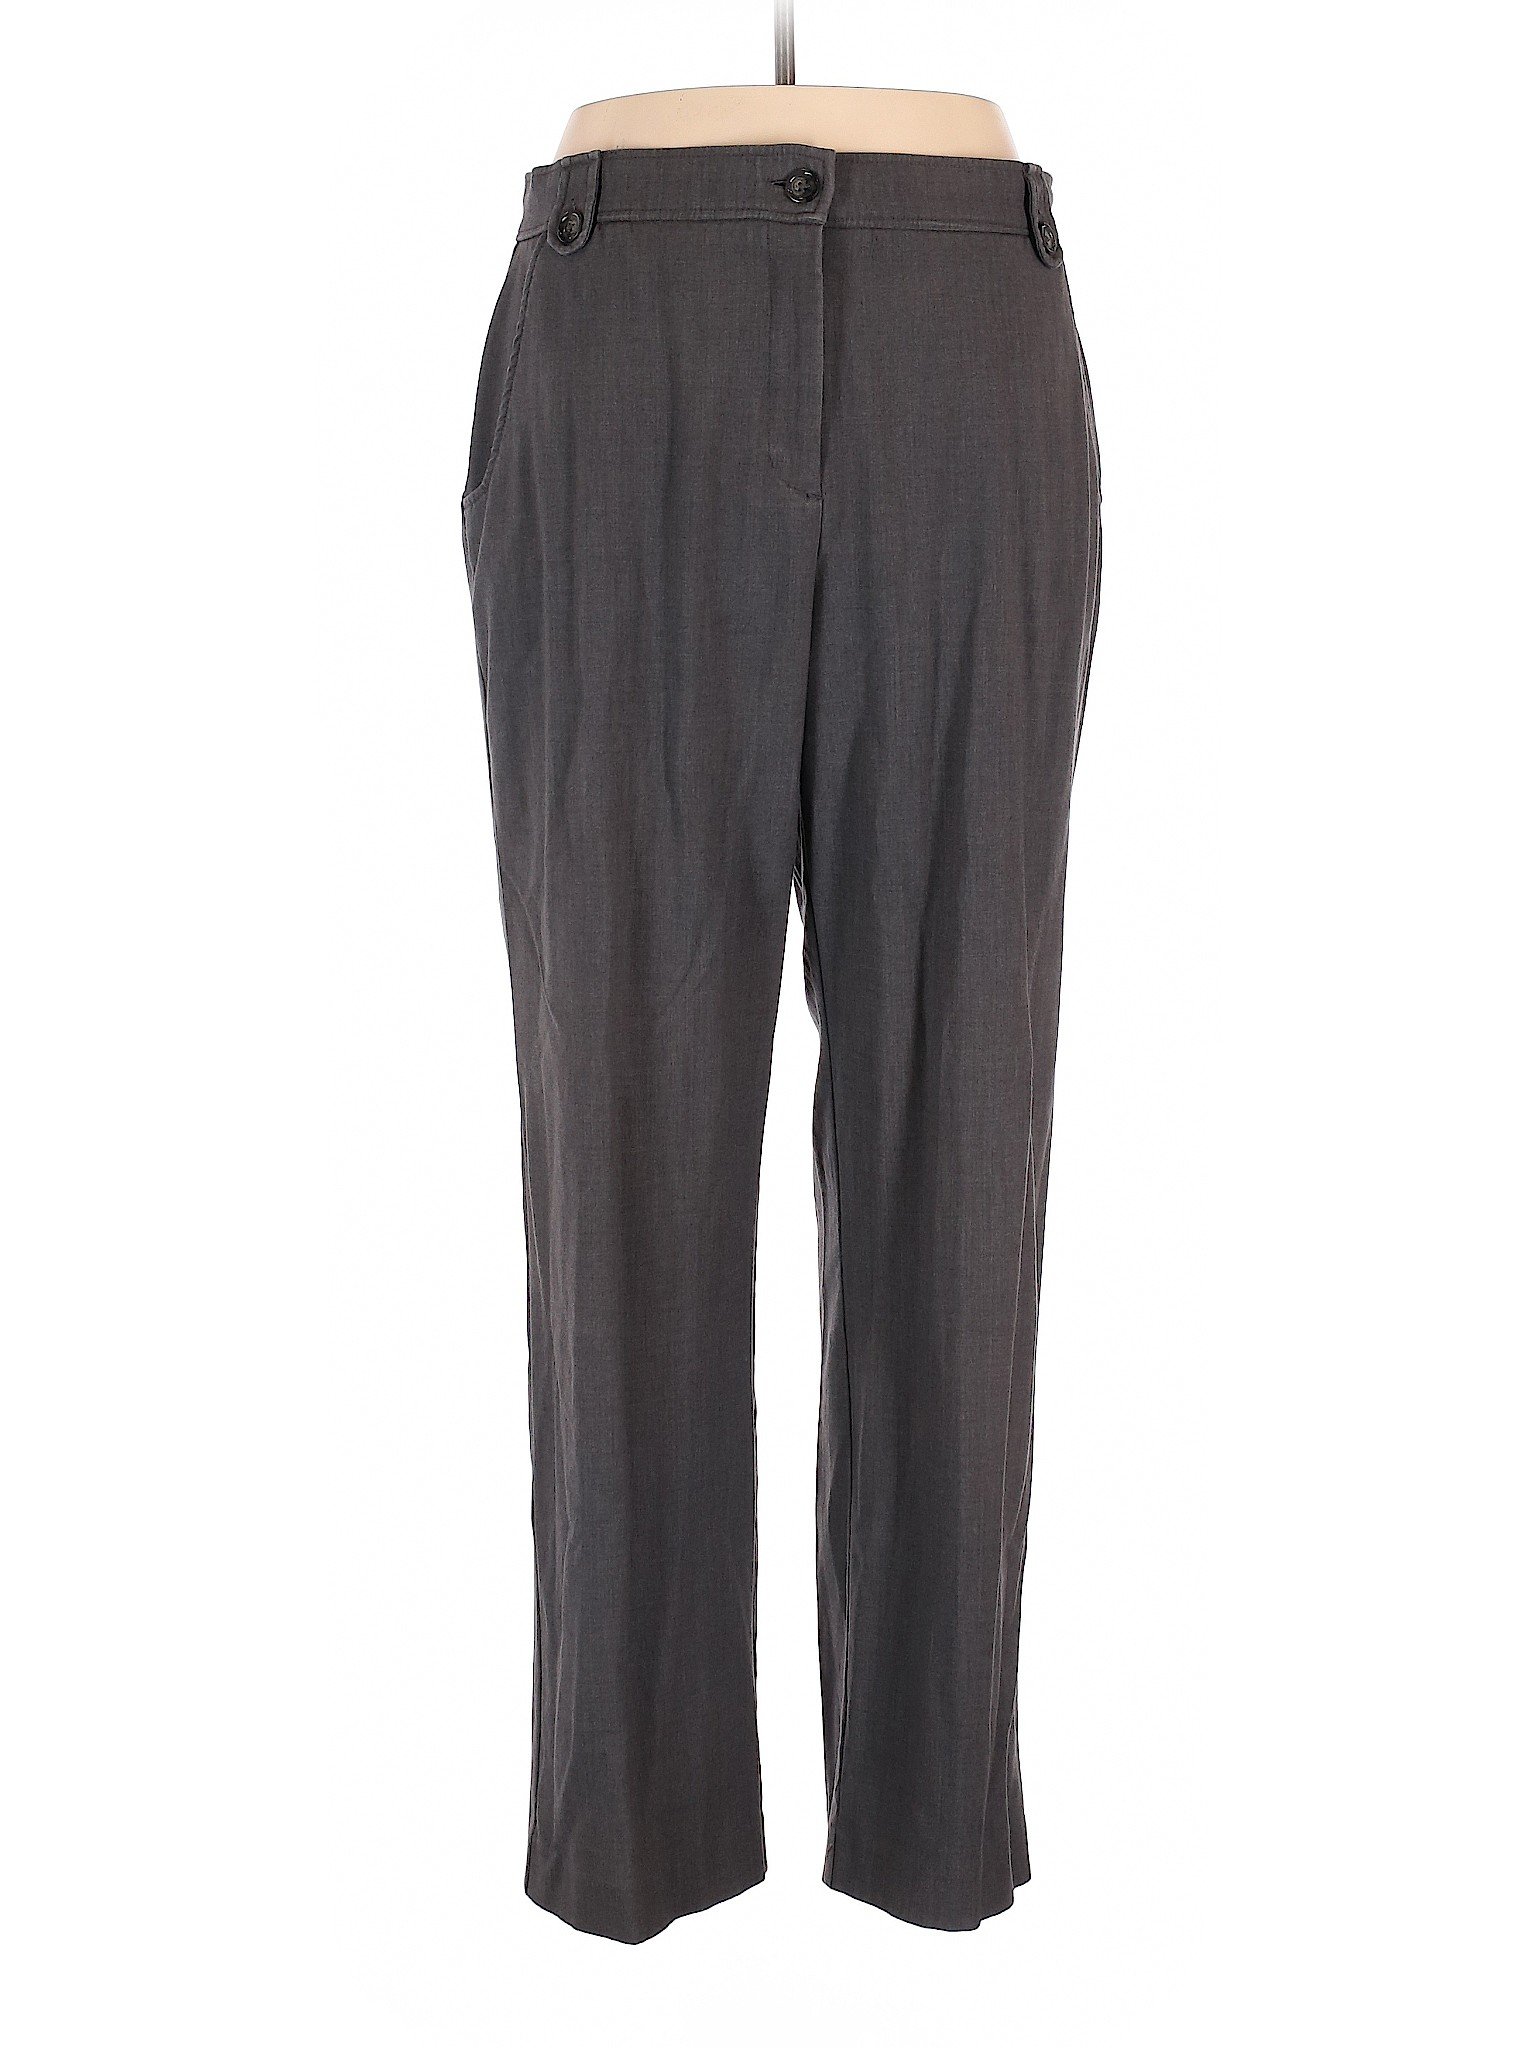 Counterparts Women Gray Dress Pants 16 | eBay